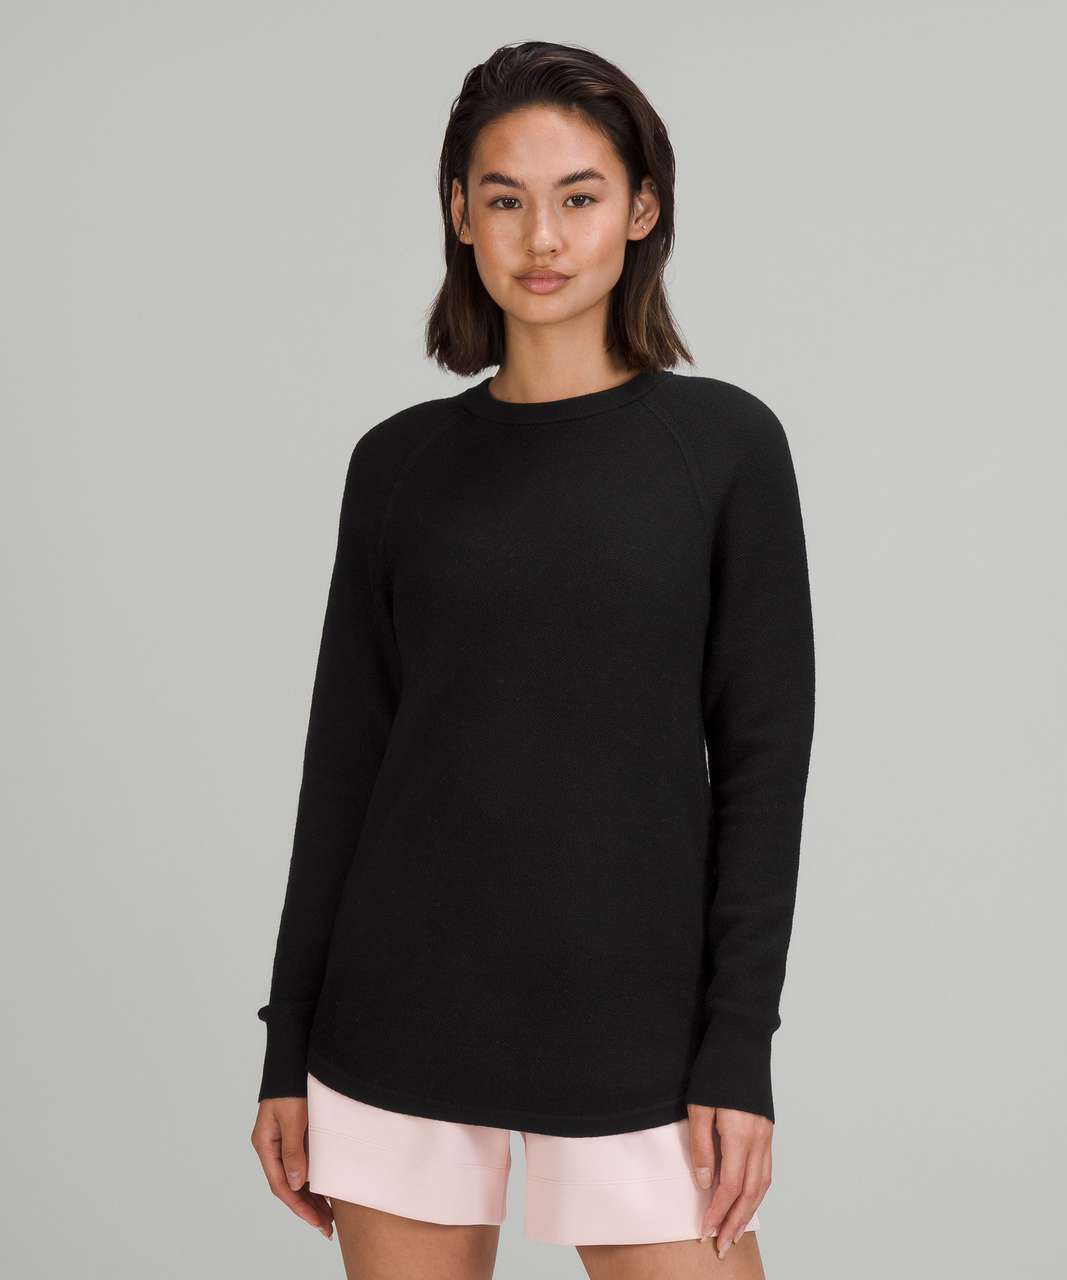 Lululemon Merino Wool Honeycomb Sweater - Black